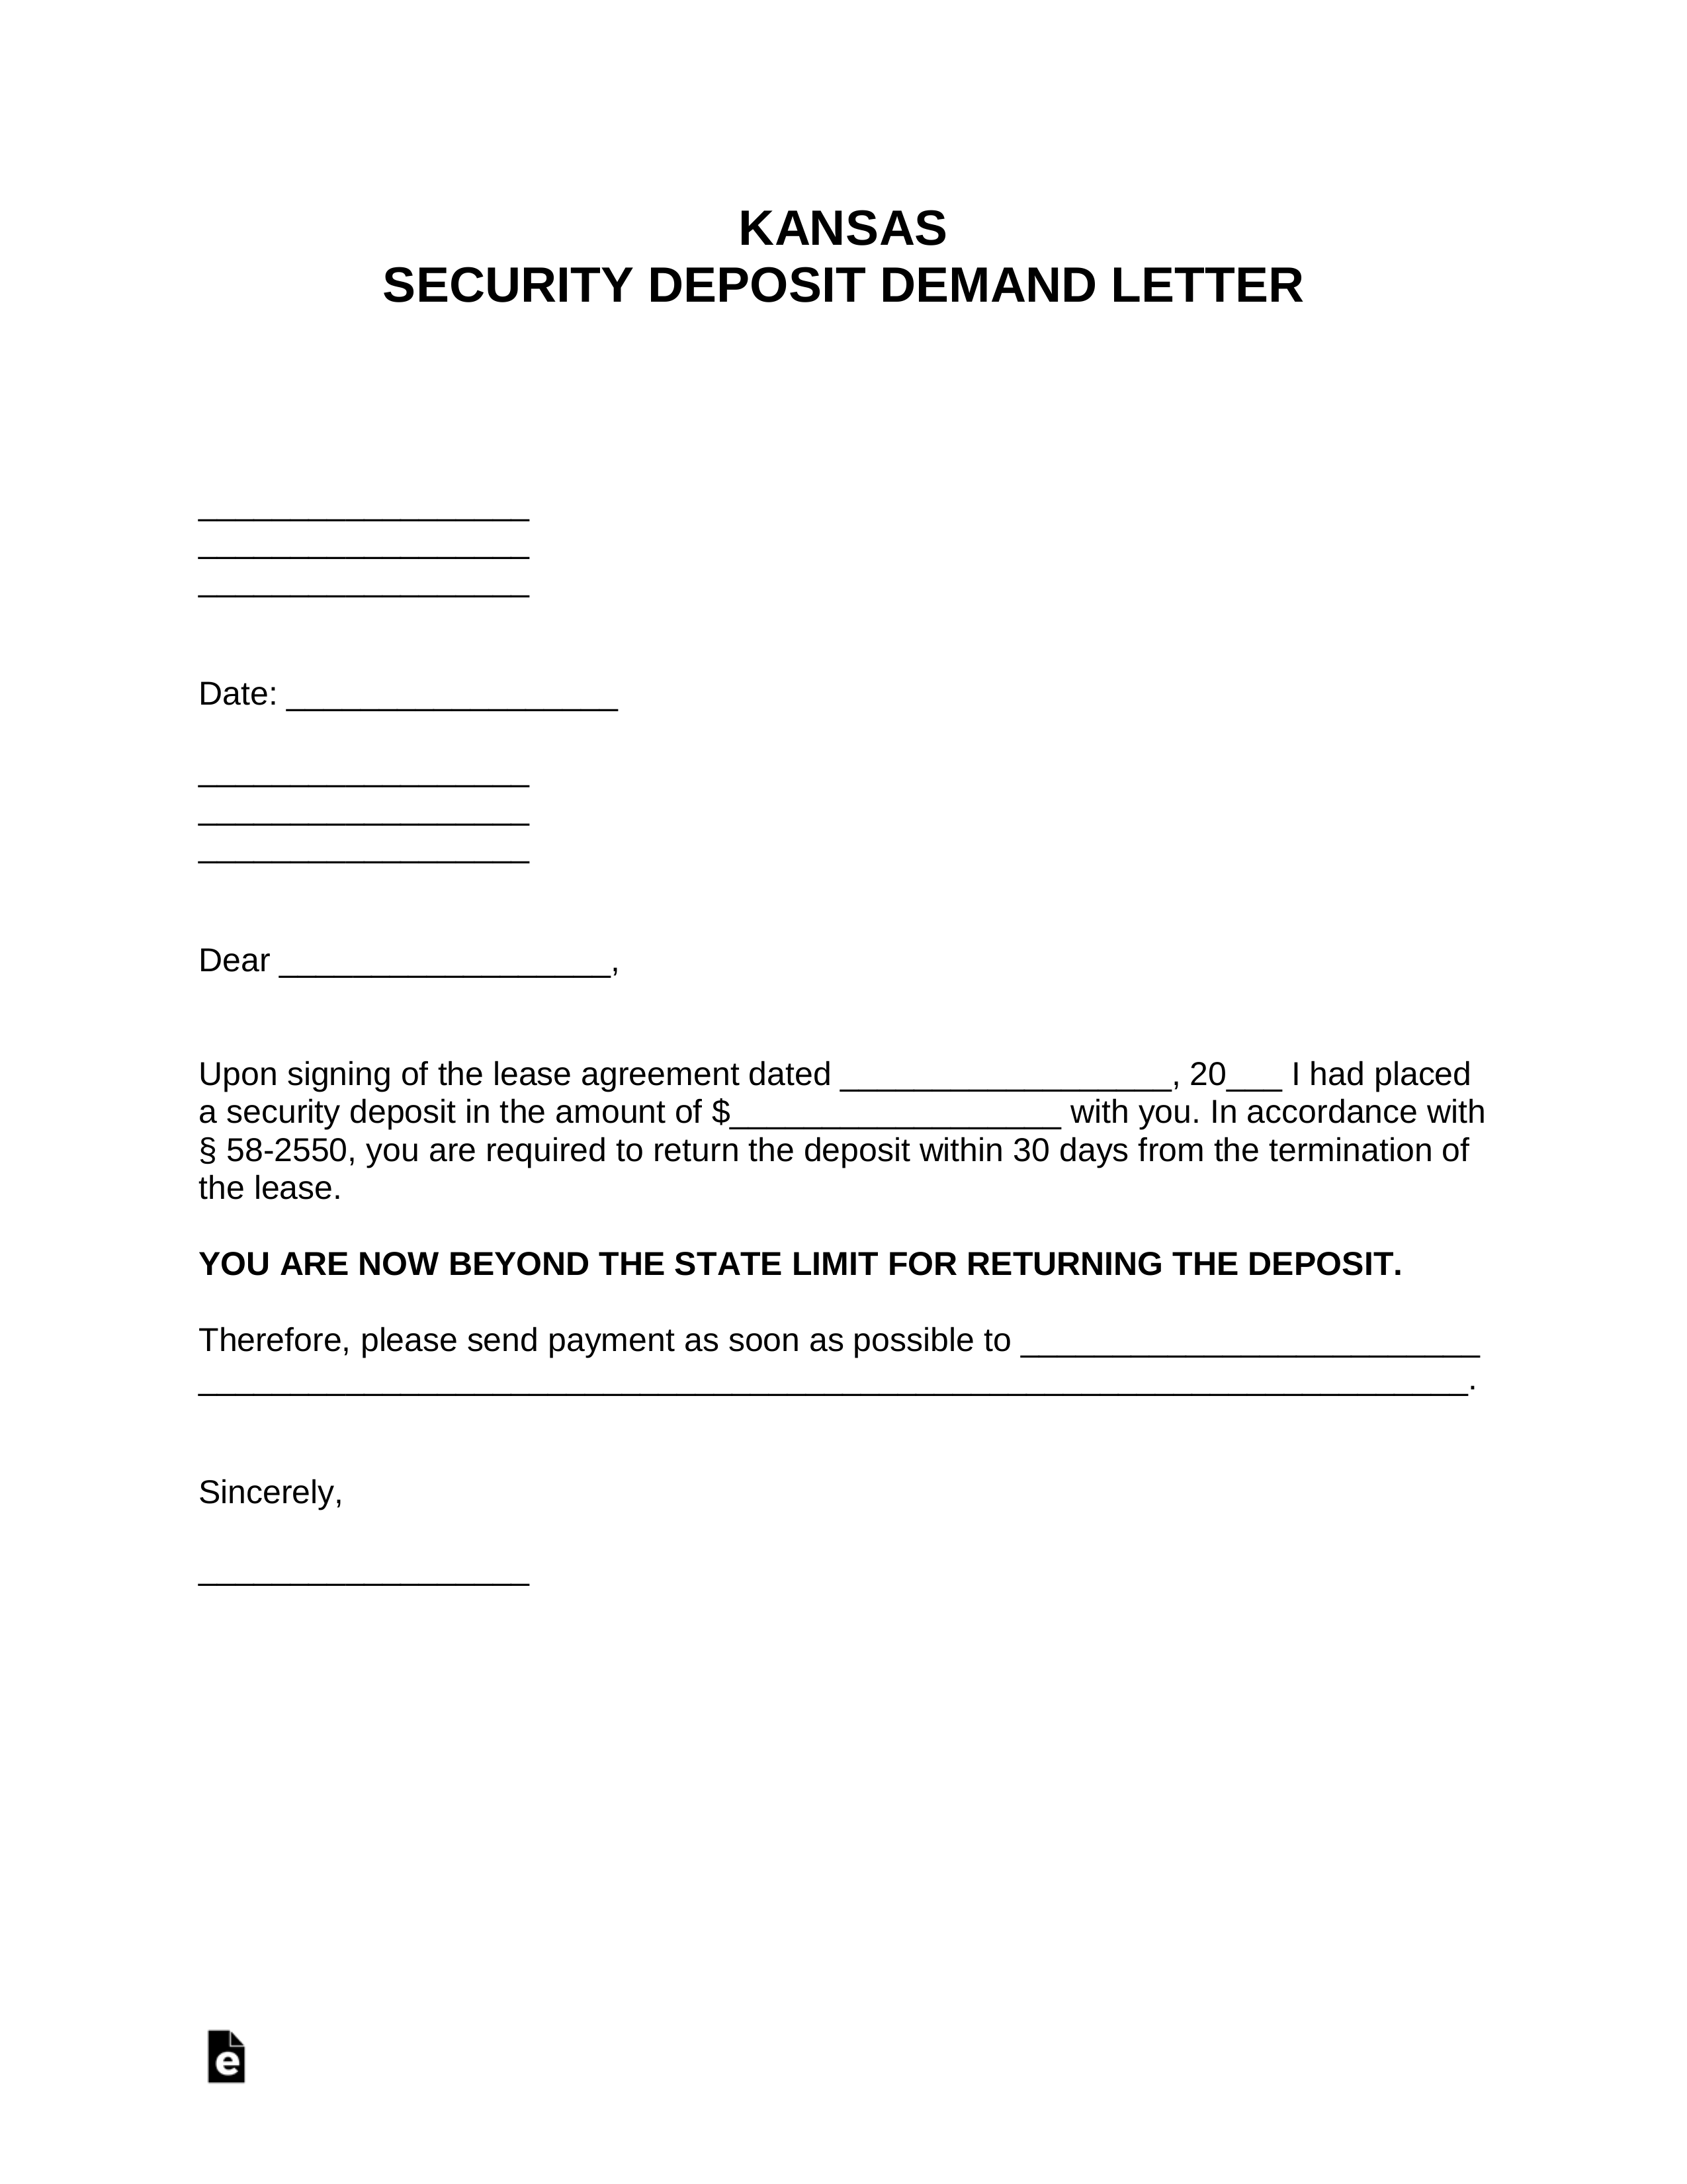 Free Kansas Security Deposit Demand Letter - PDF  Word – eForms With Regard To Security Deposit Agreement Letter With Regard To Security Deposit Agreement Letter